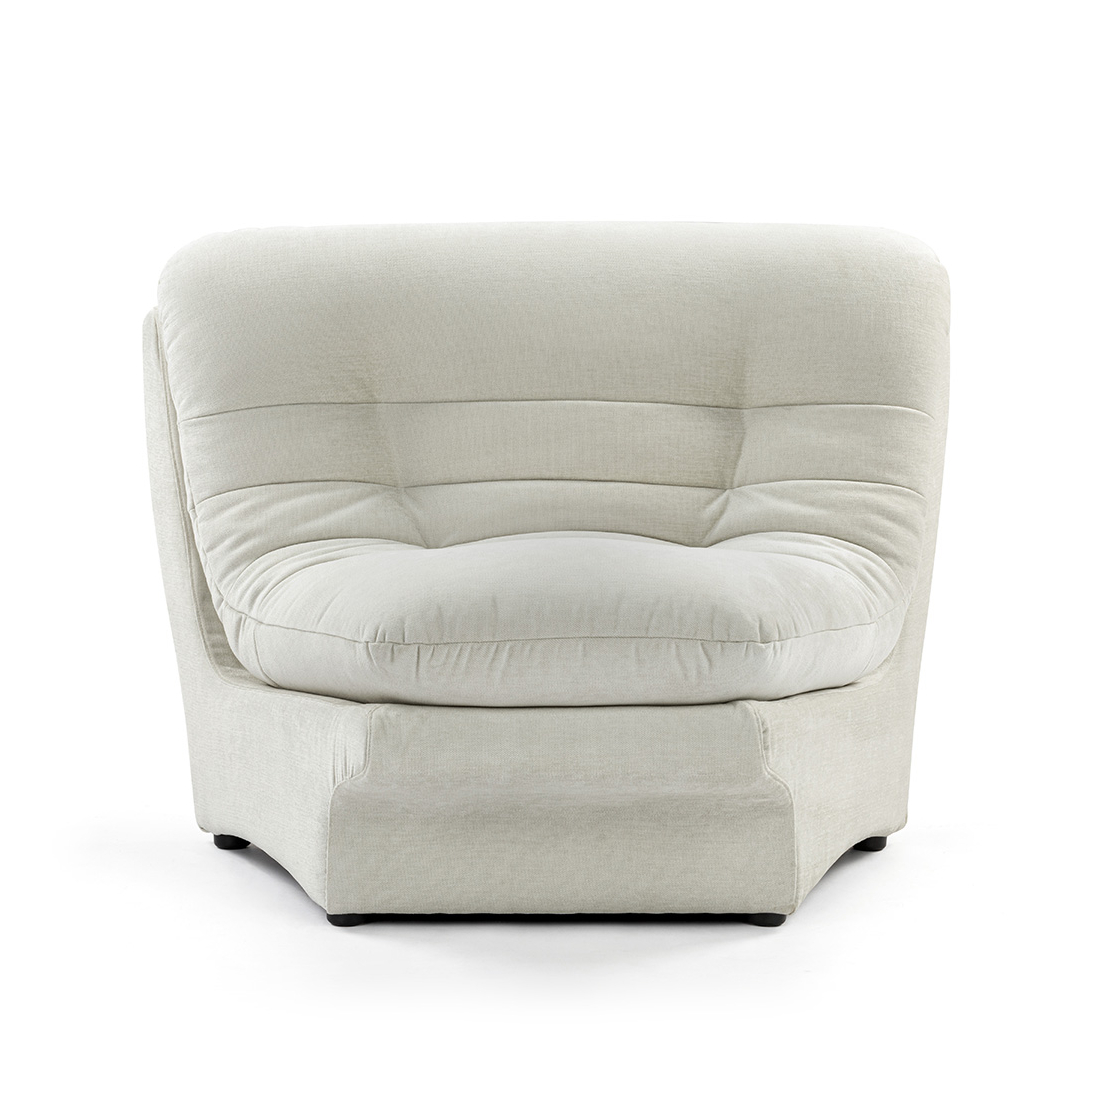 Carsons Mid Century Curved Modular Sectional Sofa | Corner Module